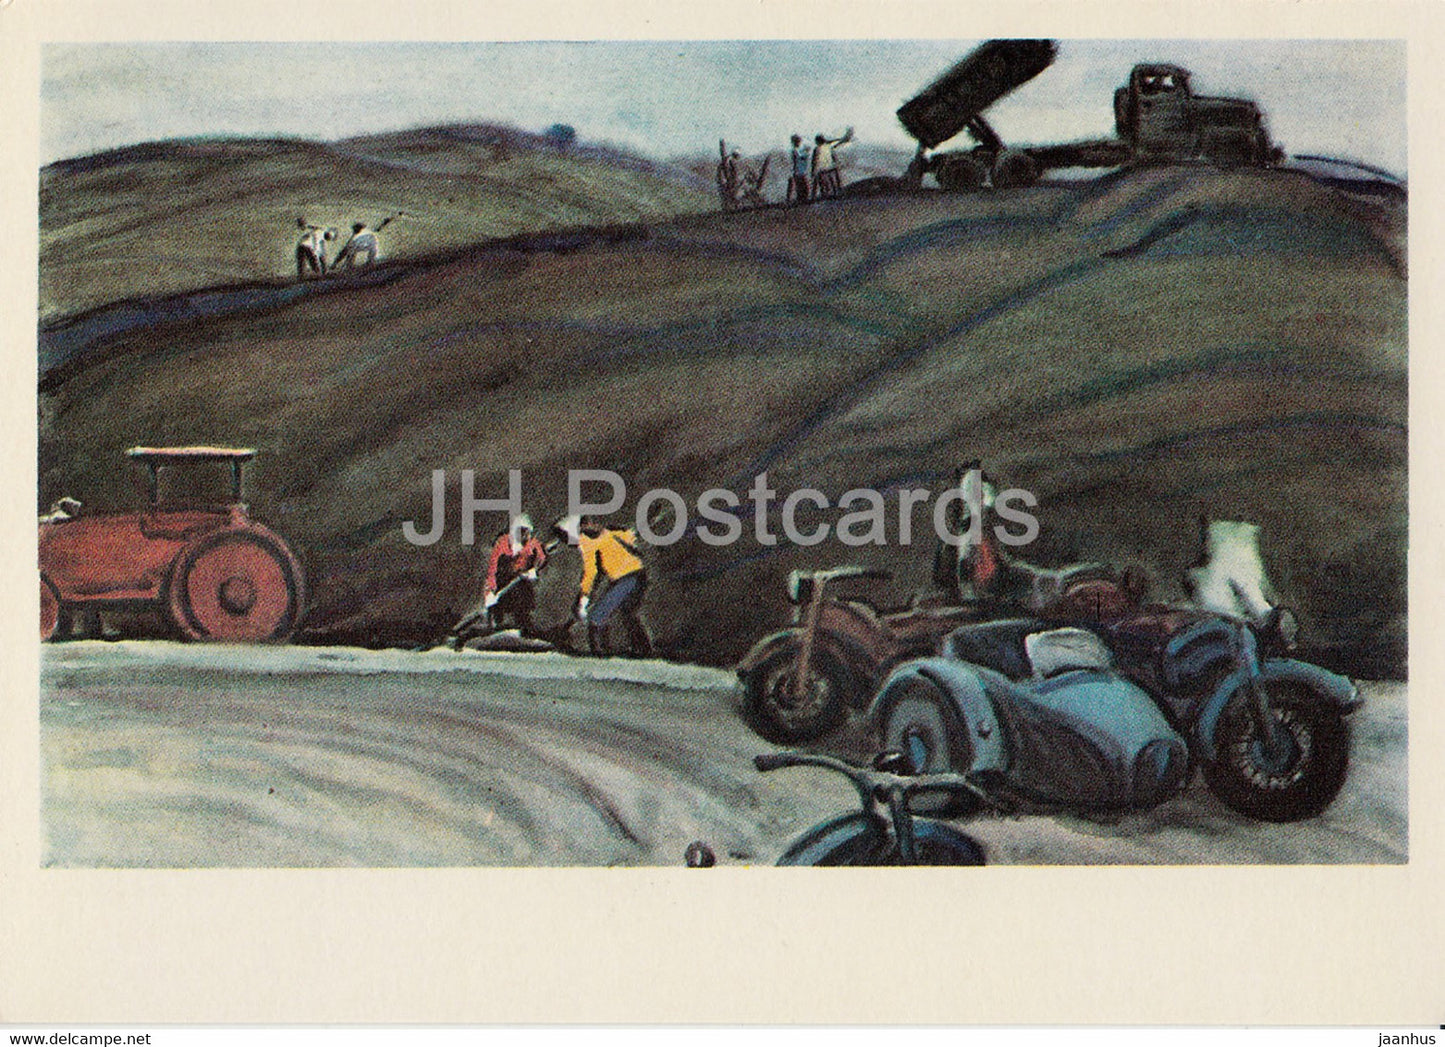 across Kyrgyzstan by V. Rogachev - Road Repair - tractor - motorbike - illustration - 1979 - Russia USSR - unused - JH Postcards